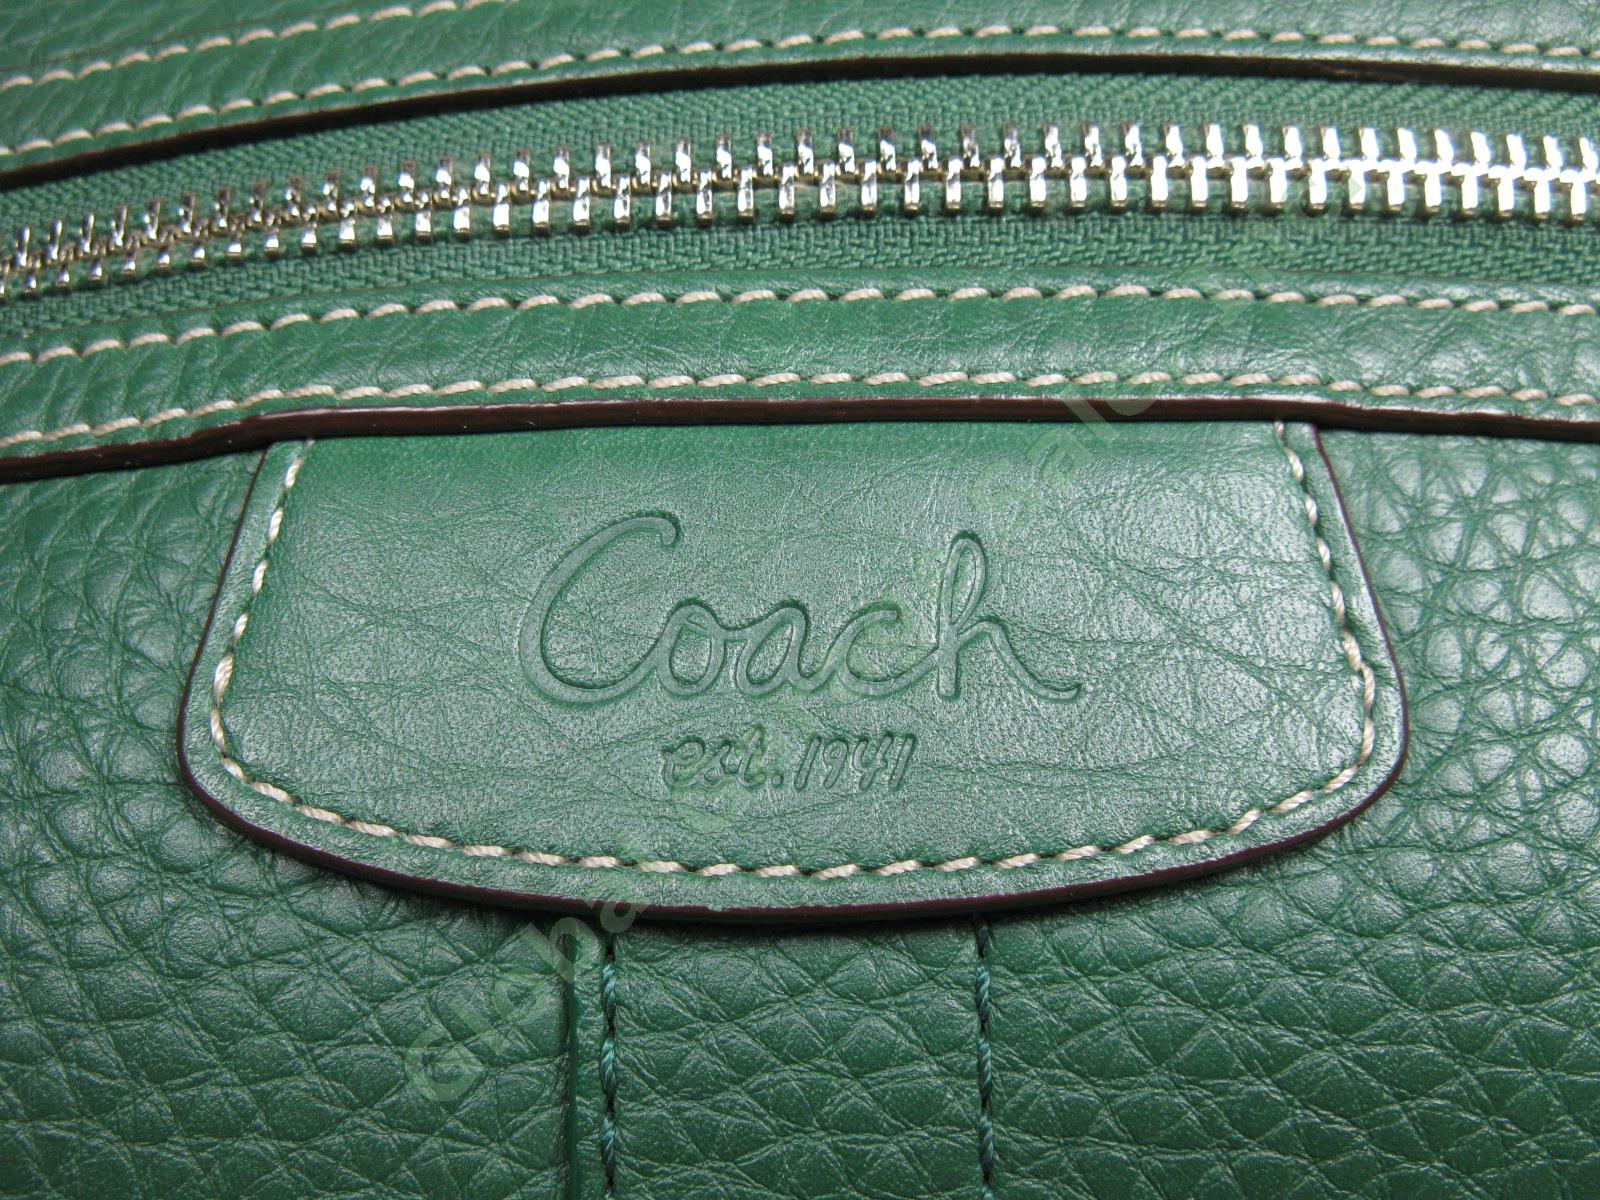 BRAND NEW Coach Designer Dark Green Pebble Leather Handbag Satchel Tote Bag NR 2